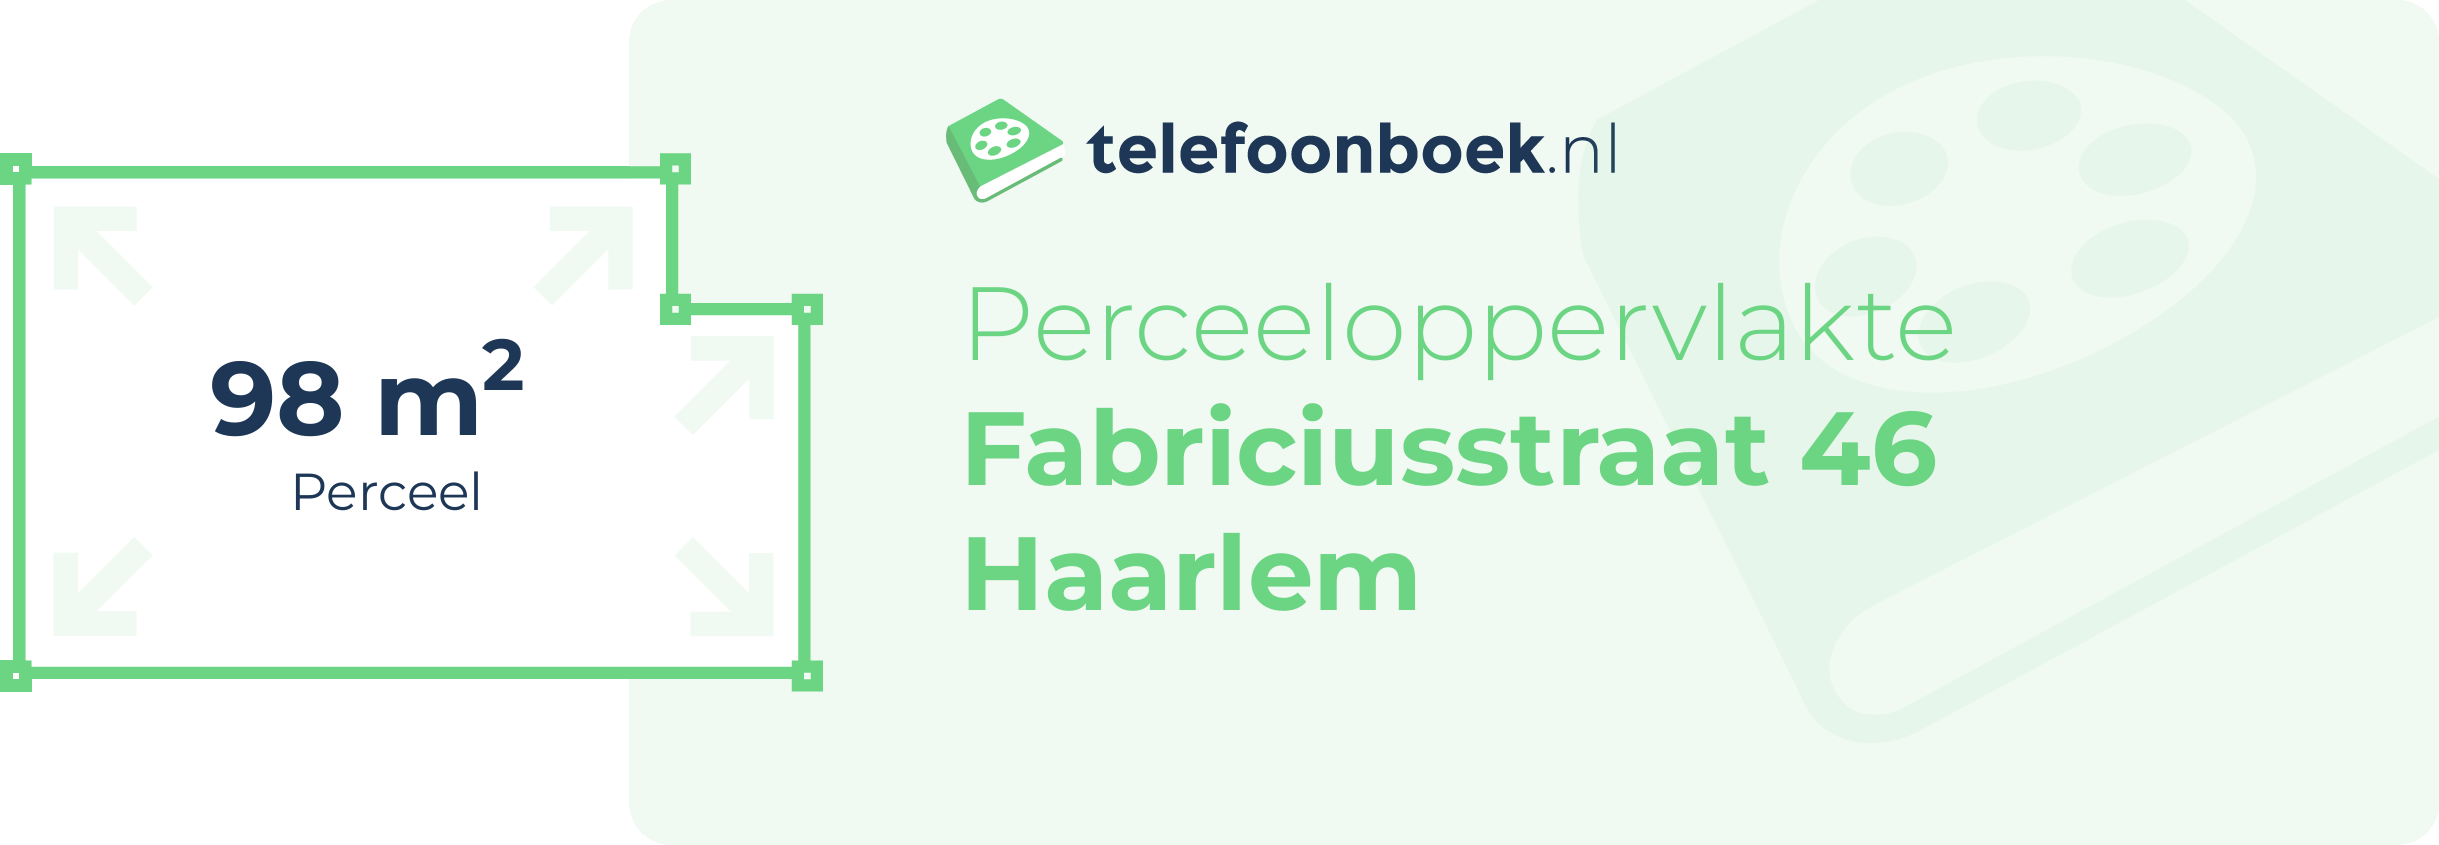 Perceeloppervlakte Fabriciusstraat 46 Haarlem